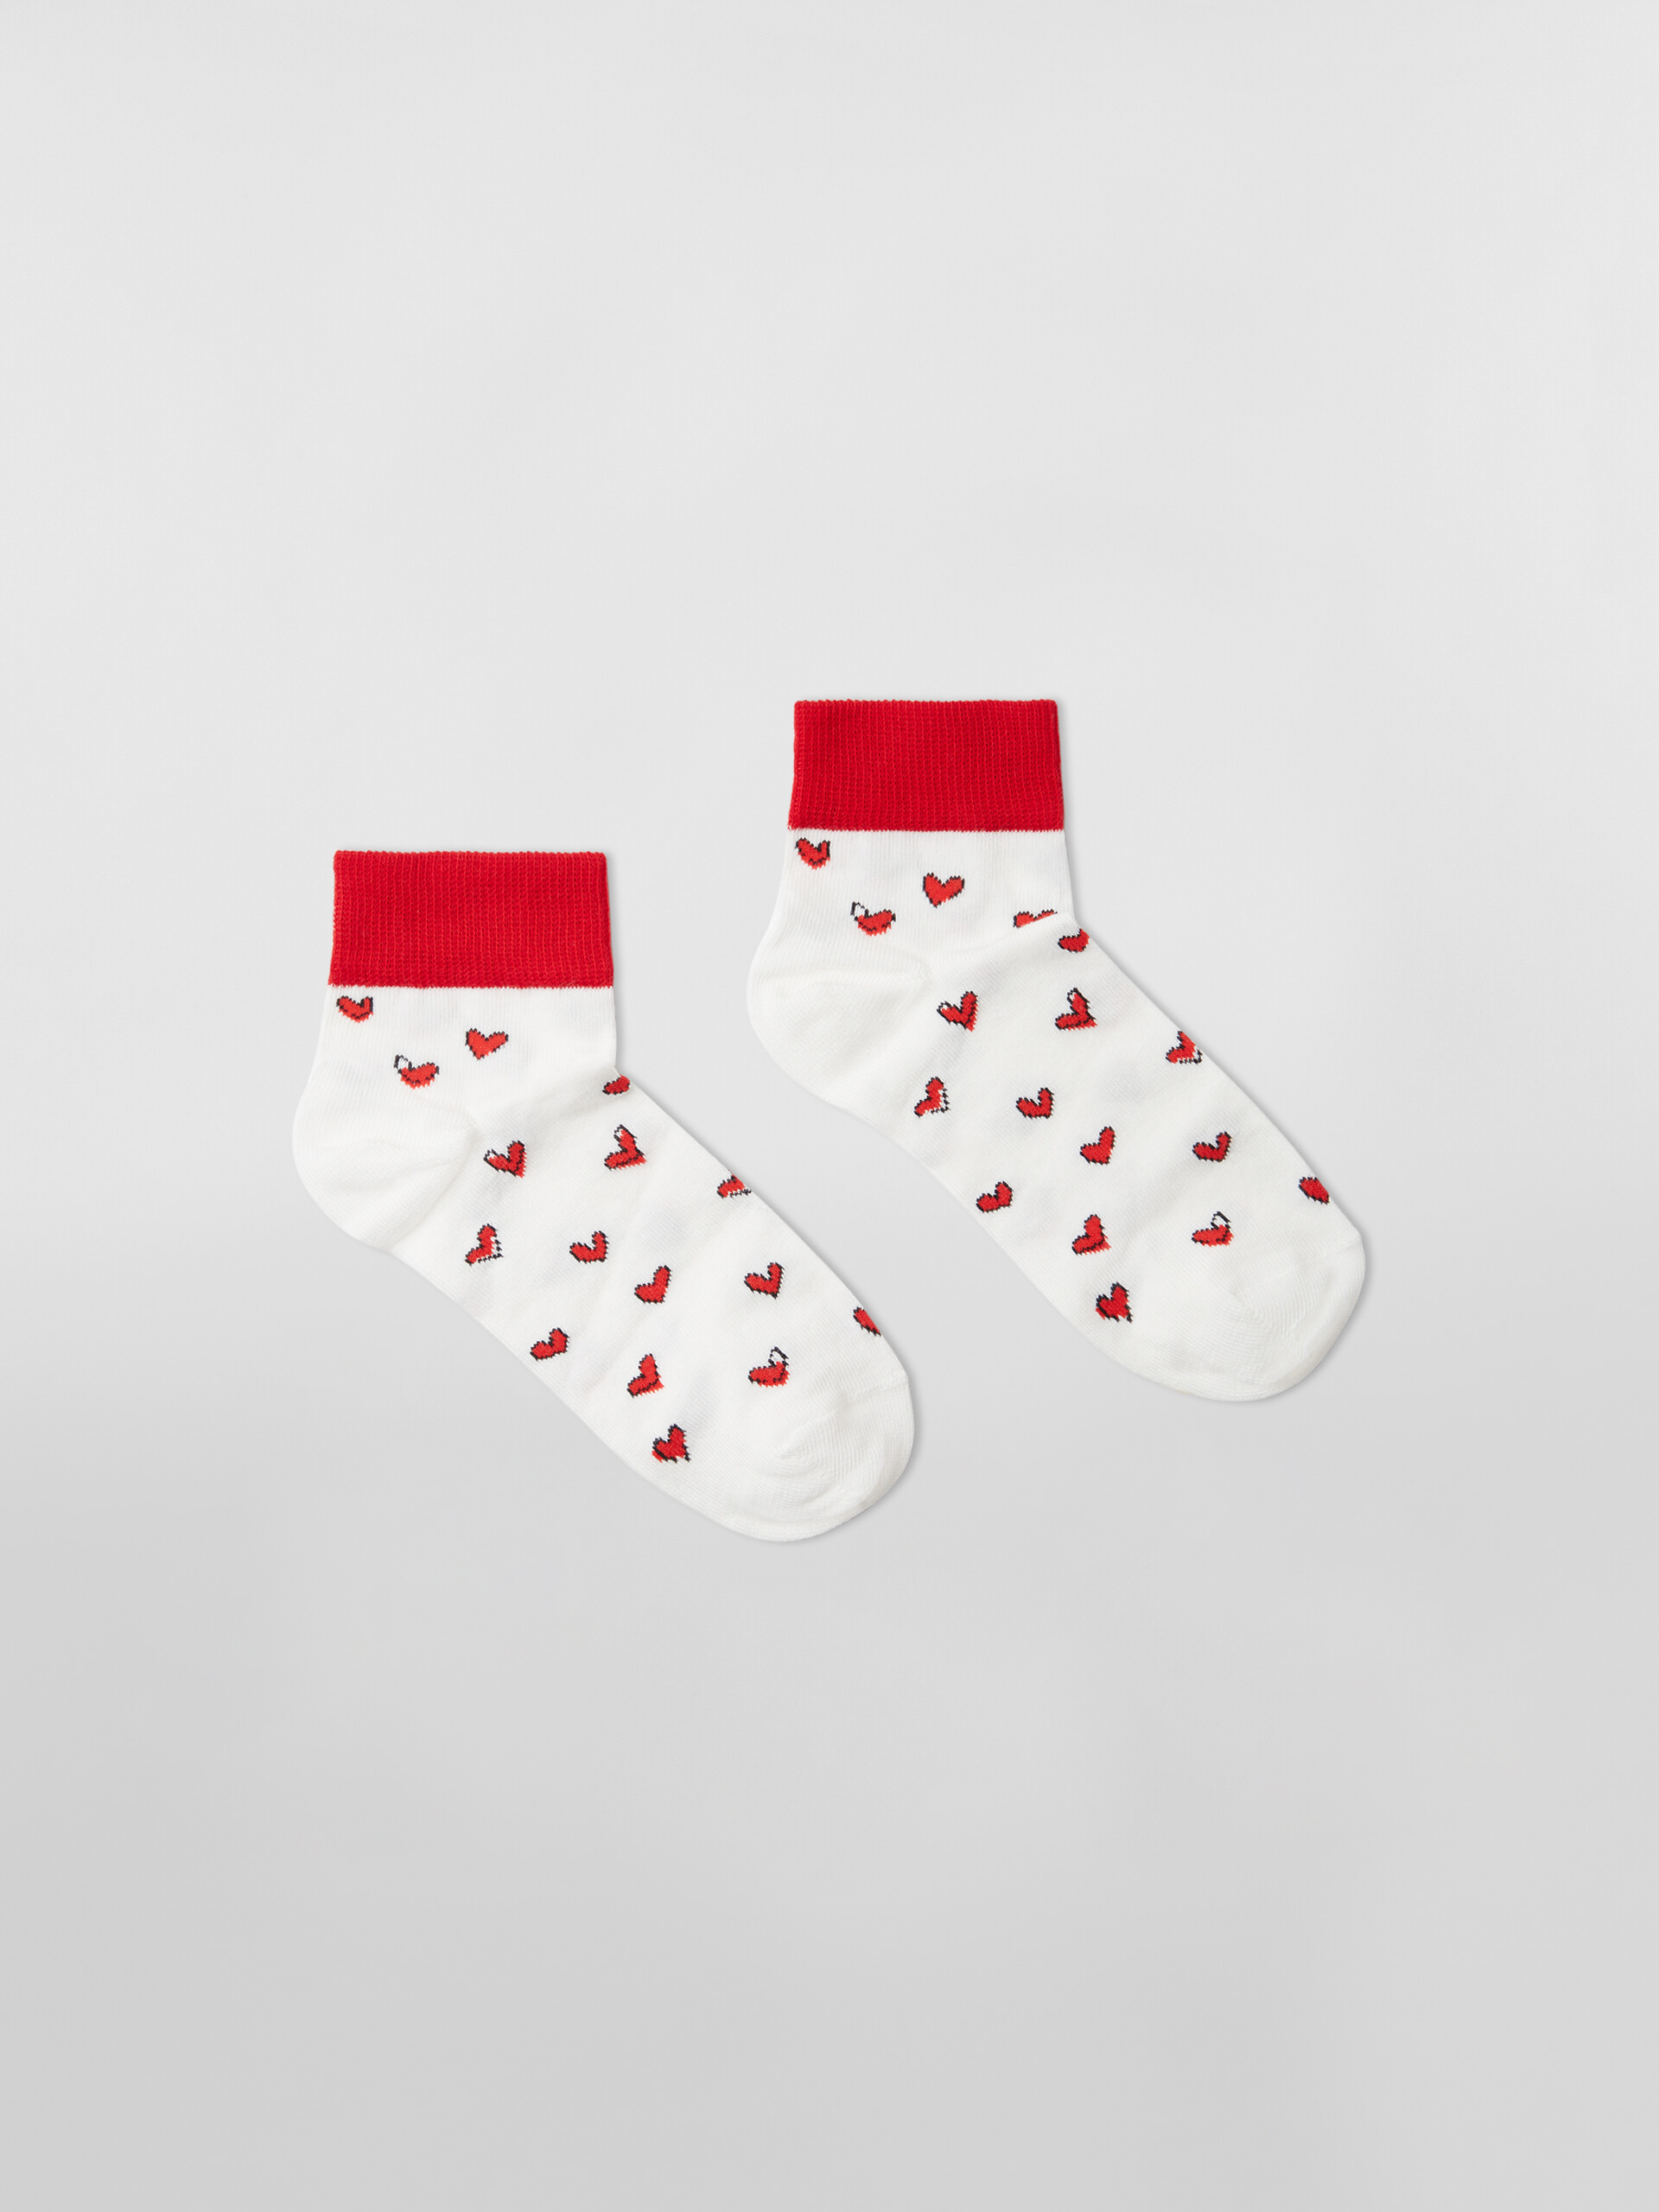 SHORT SOCKS WITH HEARTS - Socks - Image 1